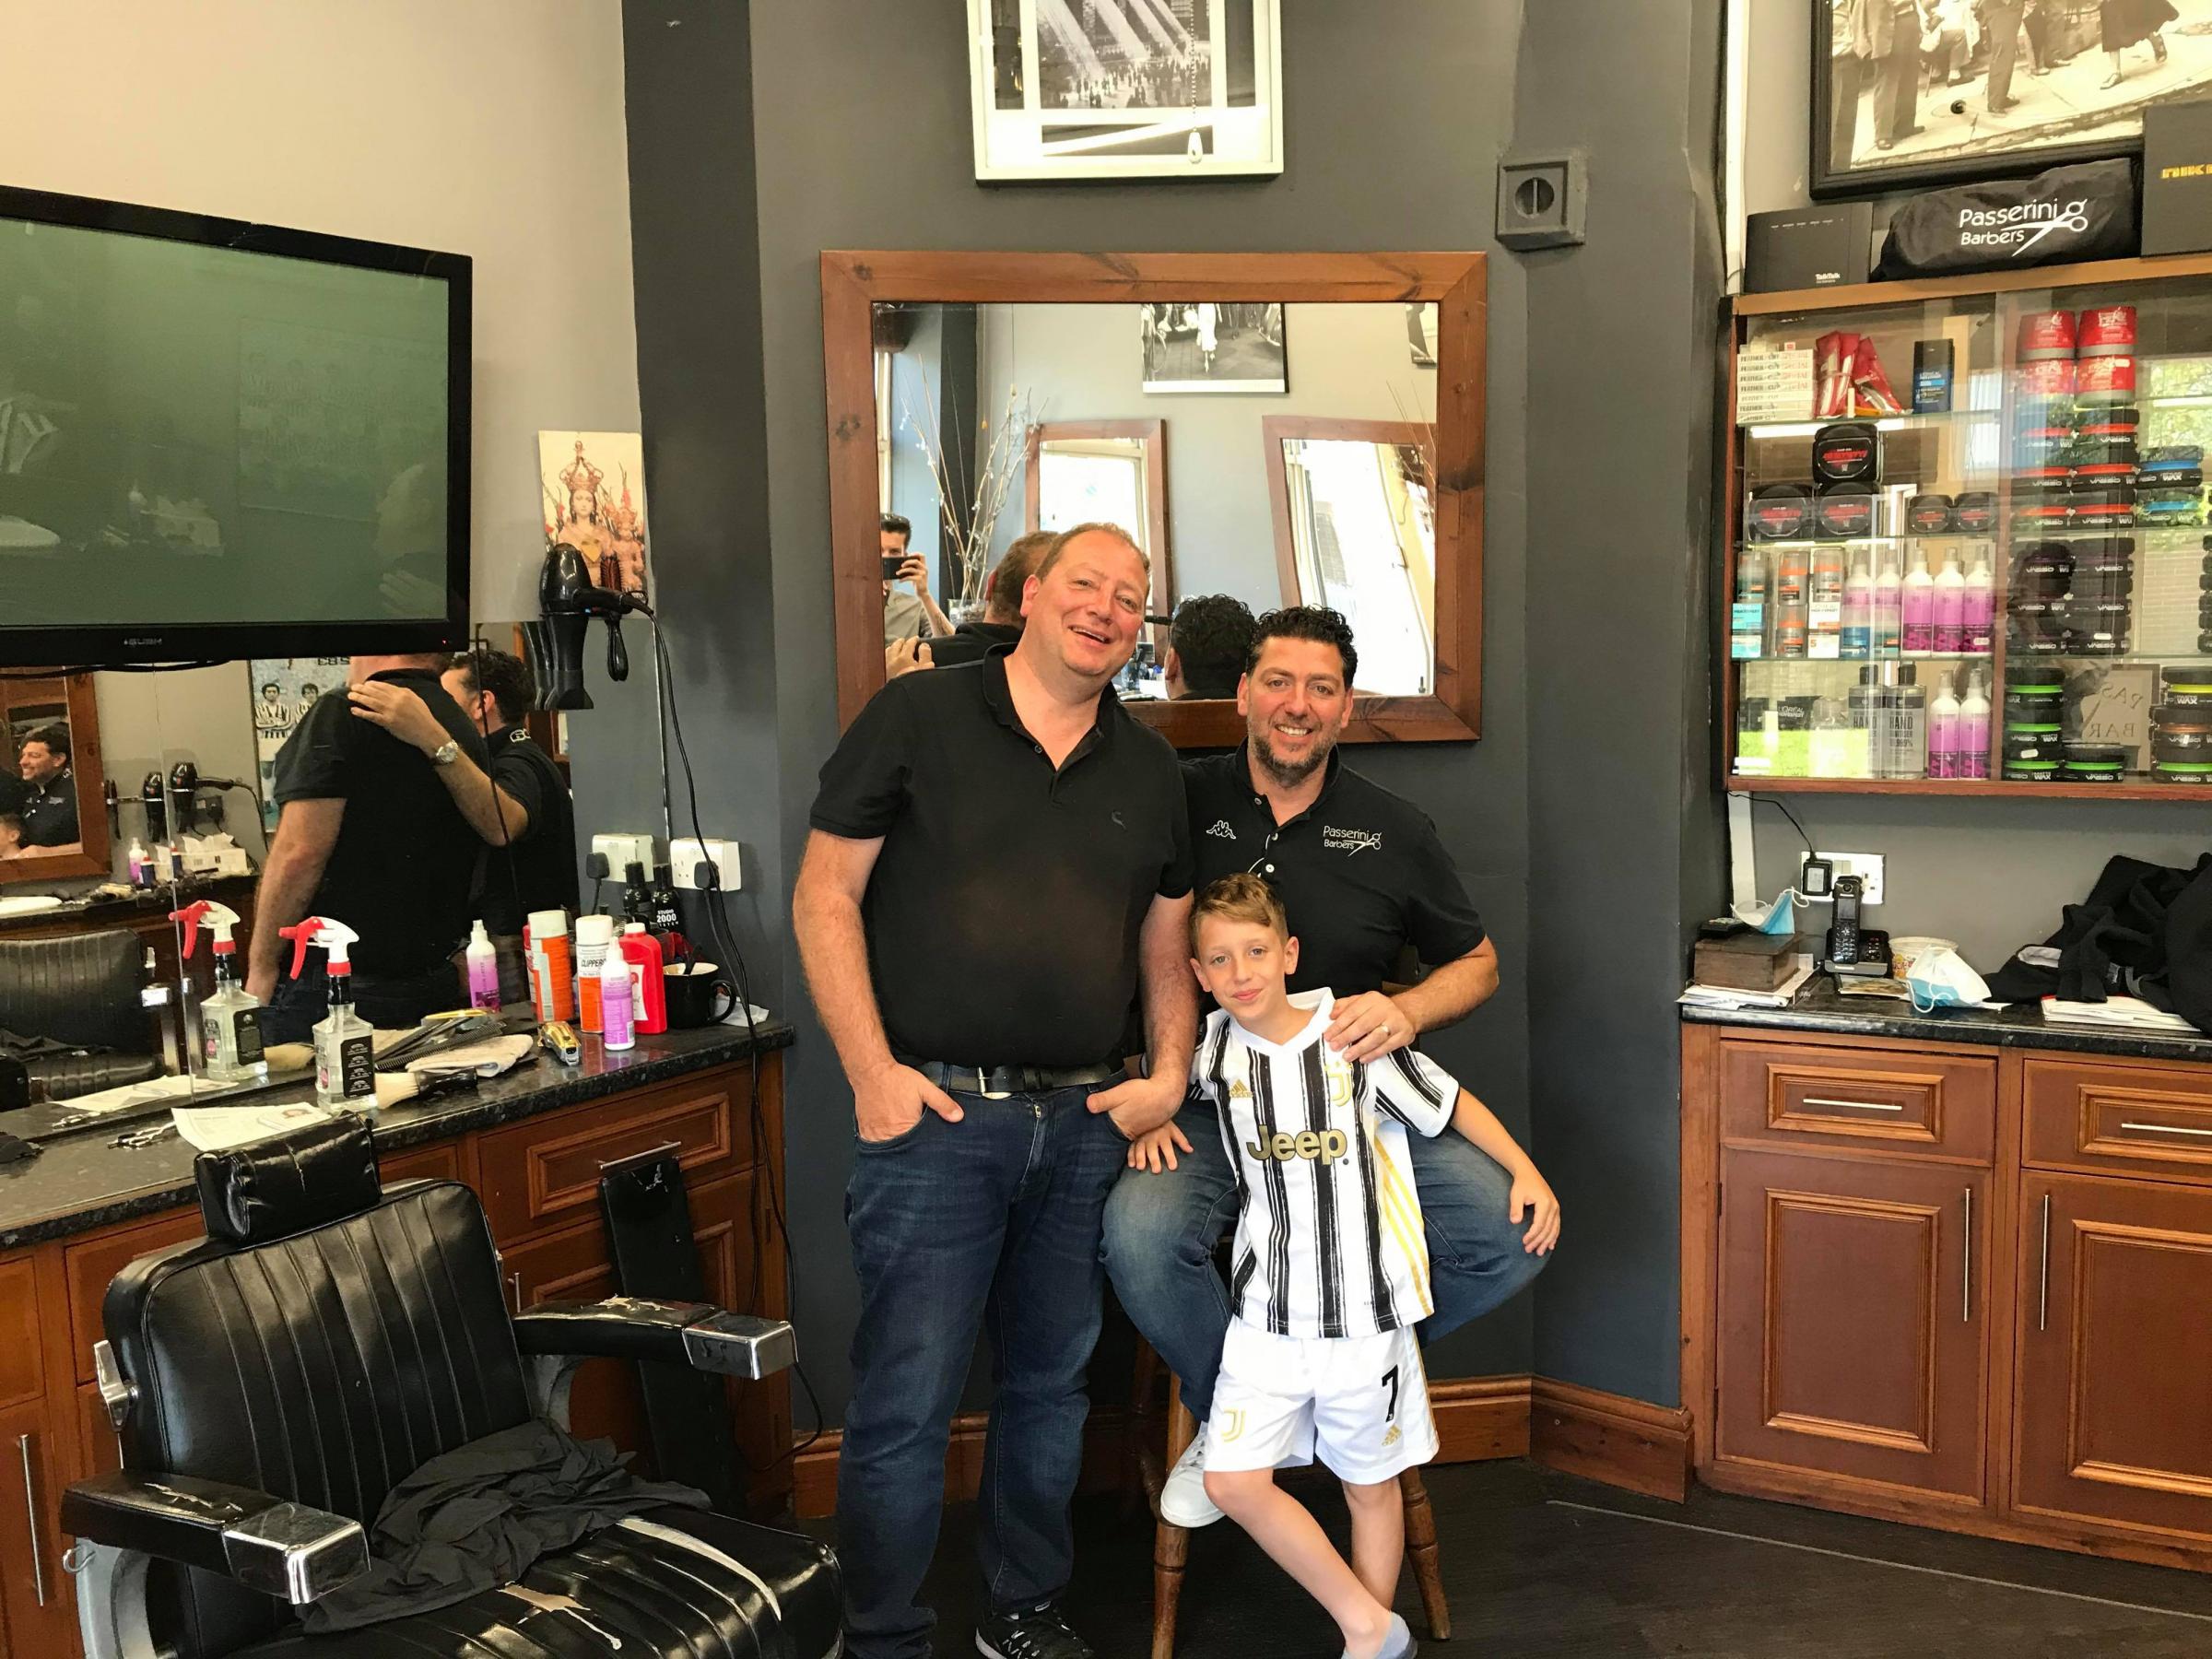 Joe, Luigi and Antonio Passerini at Passerini Barbers